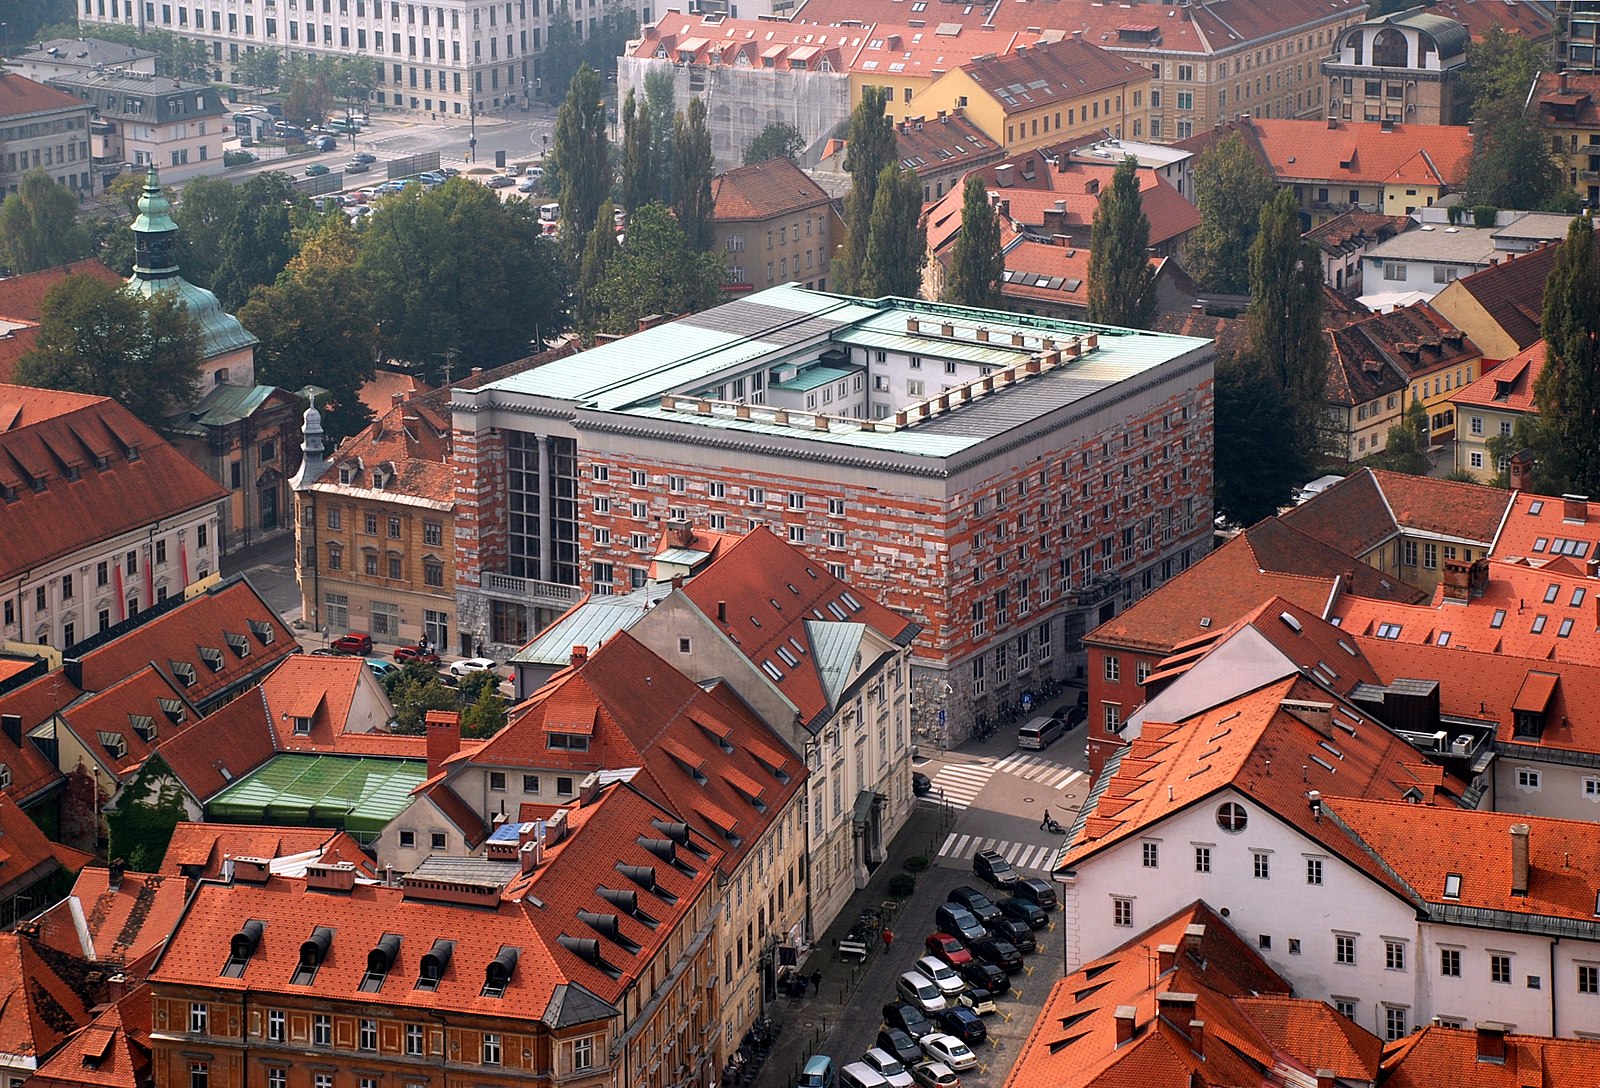 Image source: https://en.wikipedia.org/wiki/File:National_Library_Ljubljana_2010.jpg